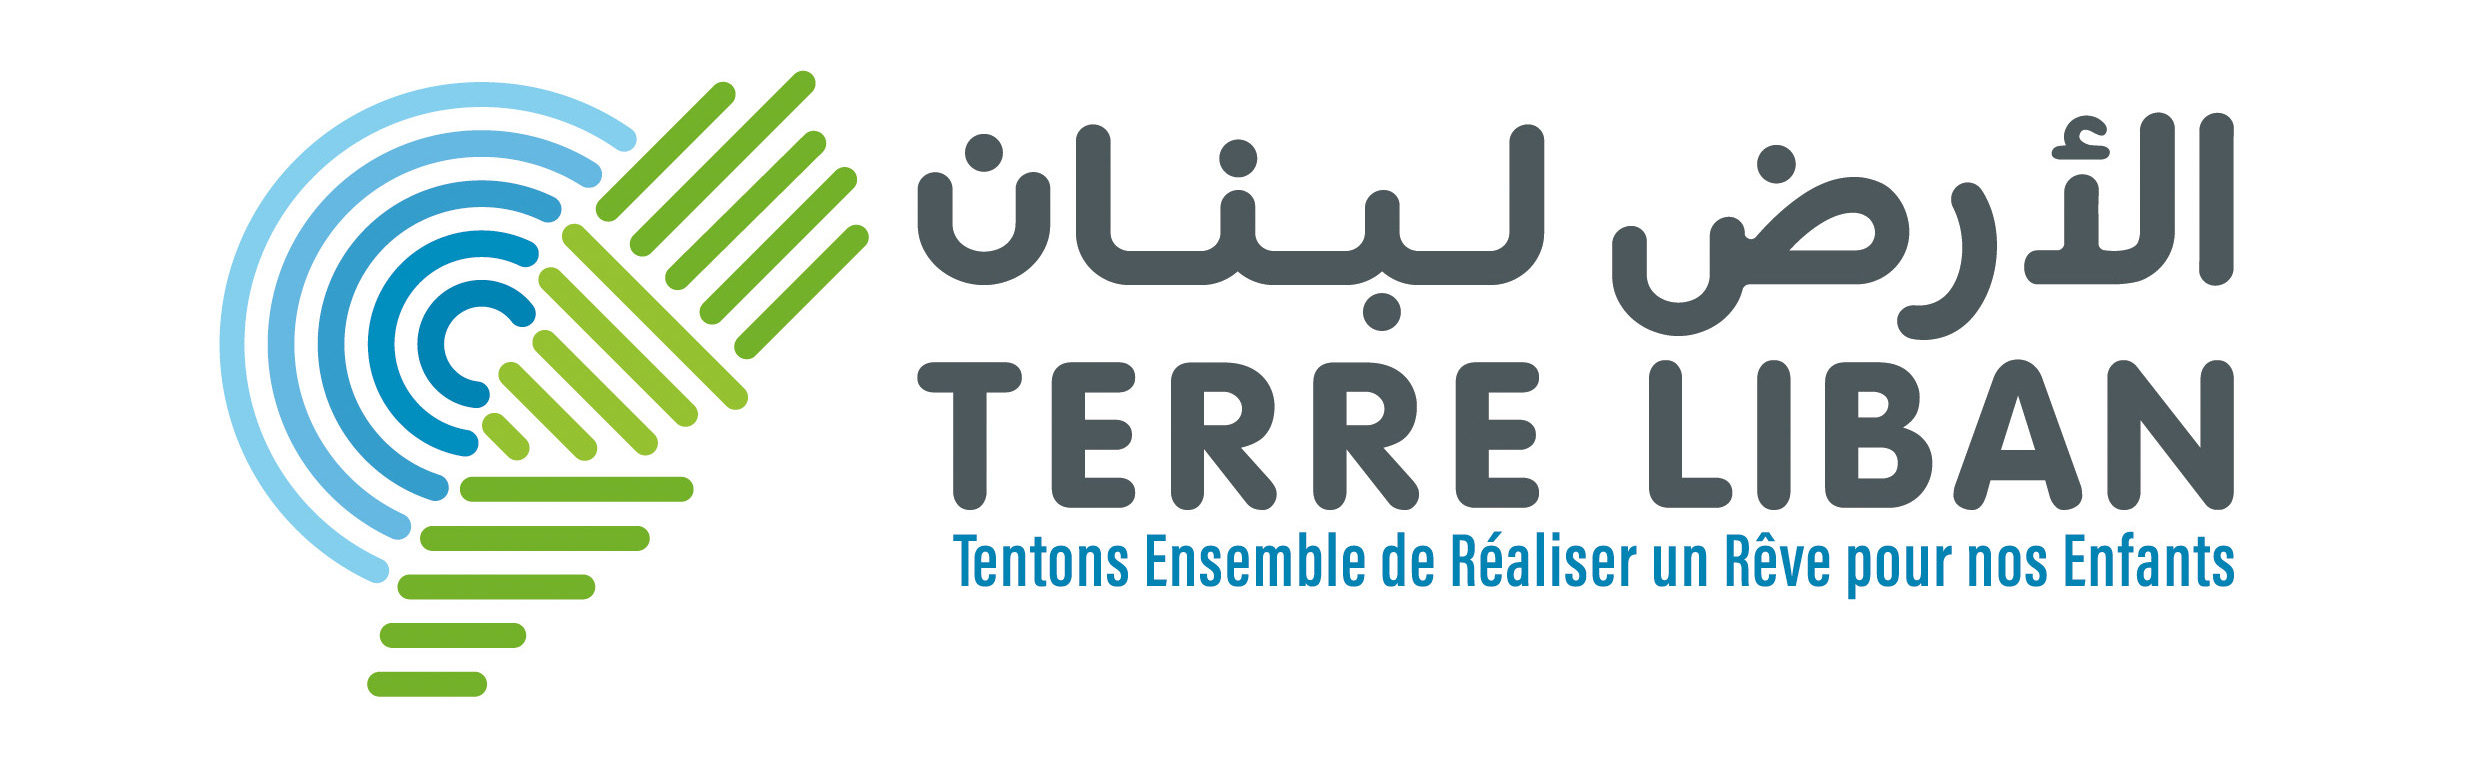 ONG T.E.R.R.E.Liban